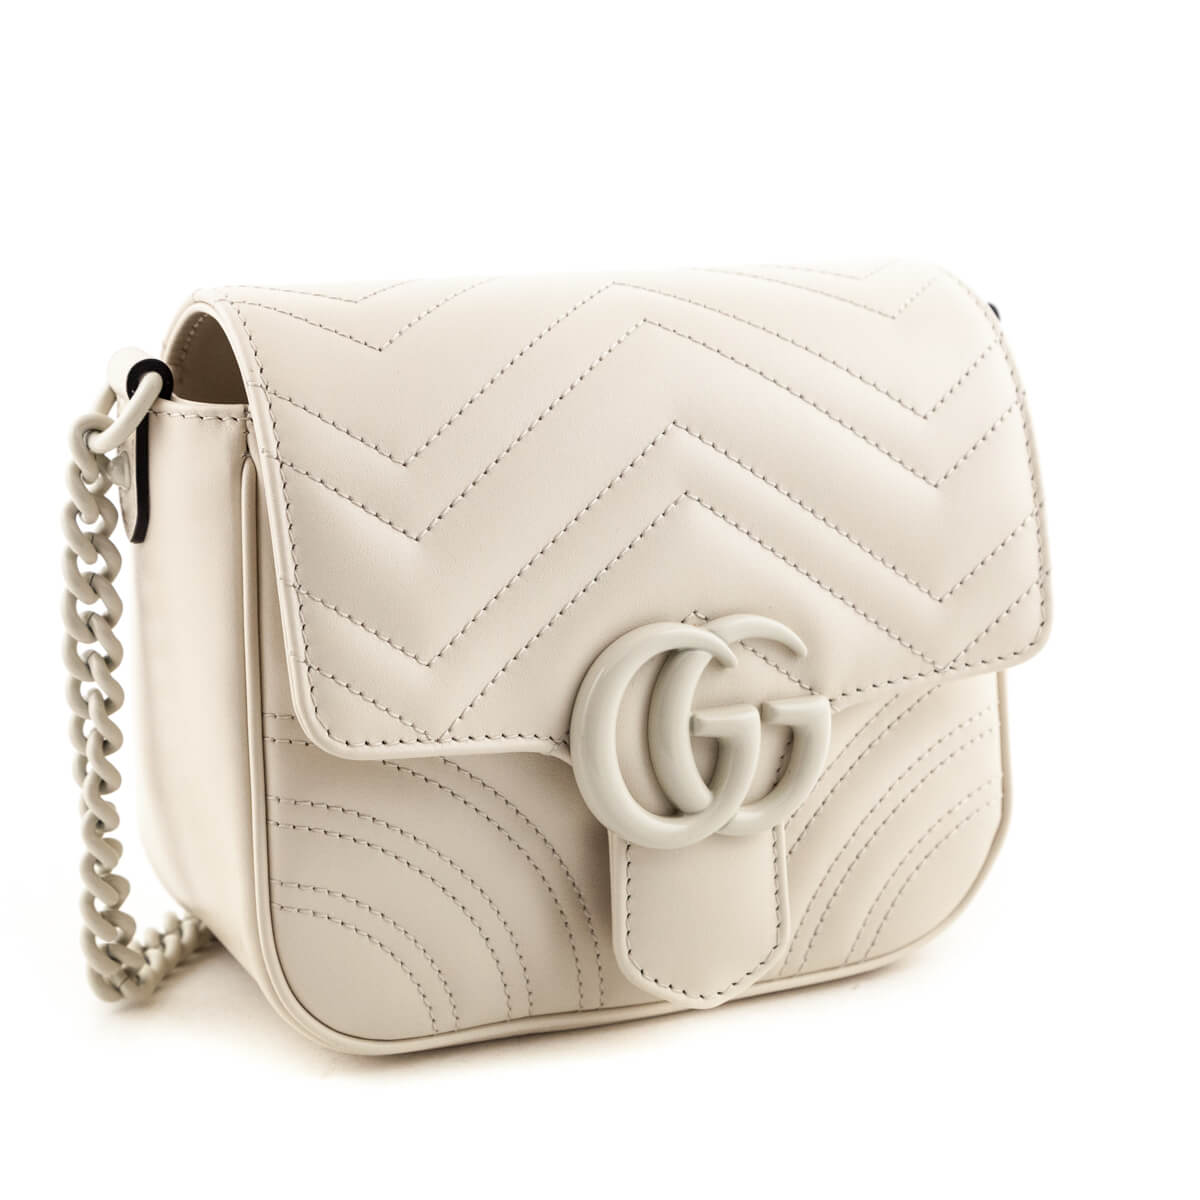 Gucci White Calfskin Matelasse Monochrome GG Marmont Bag - Love that Bag etc - Preowned Authentic Designer Handbags & Preloved Fashions